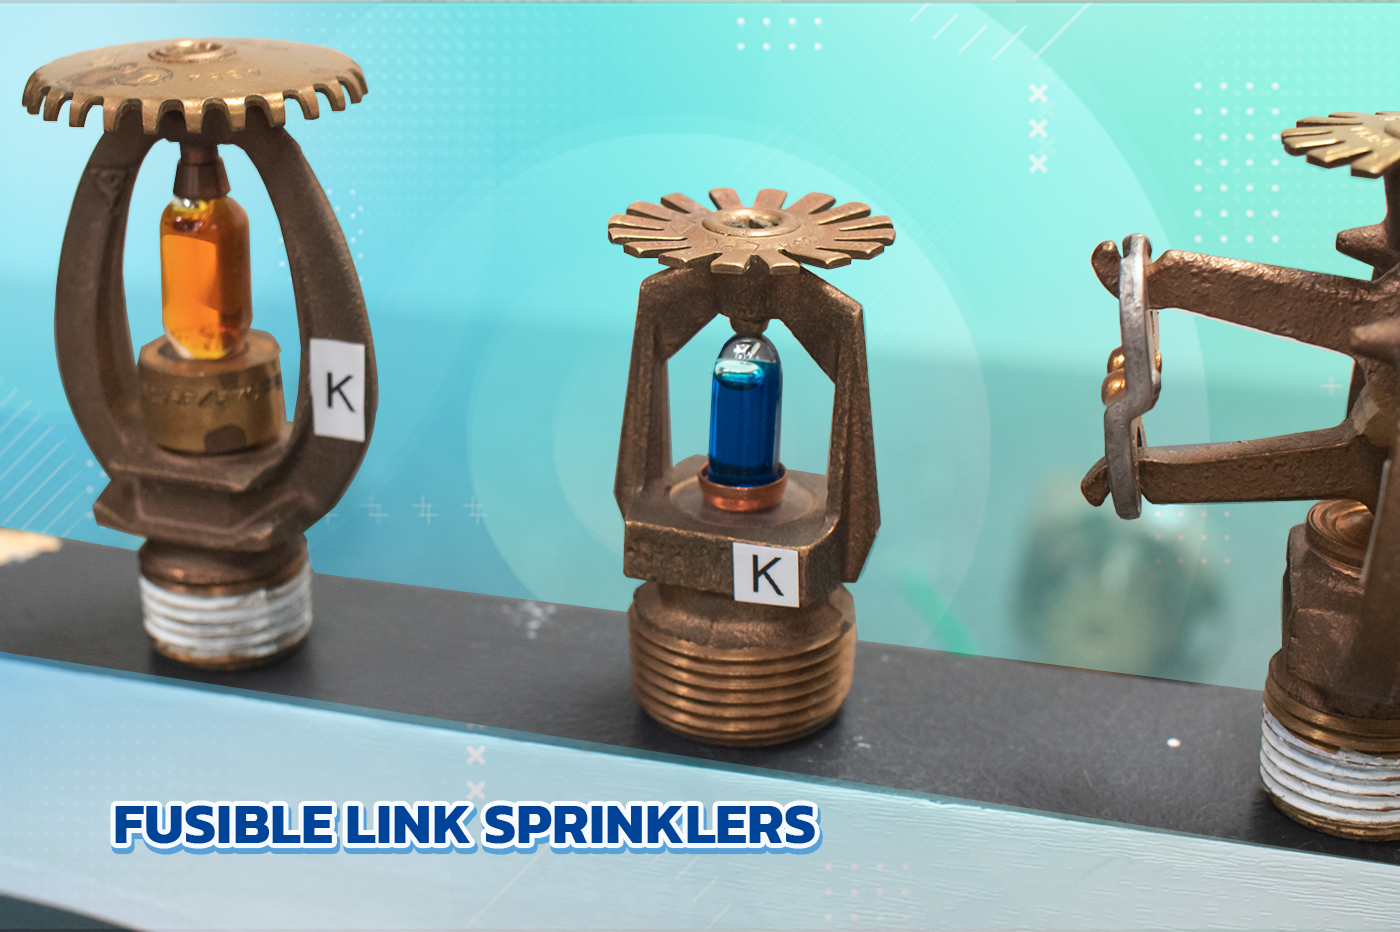 5.Fusible Link Sprinklers